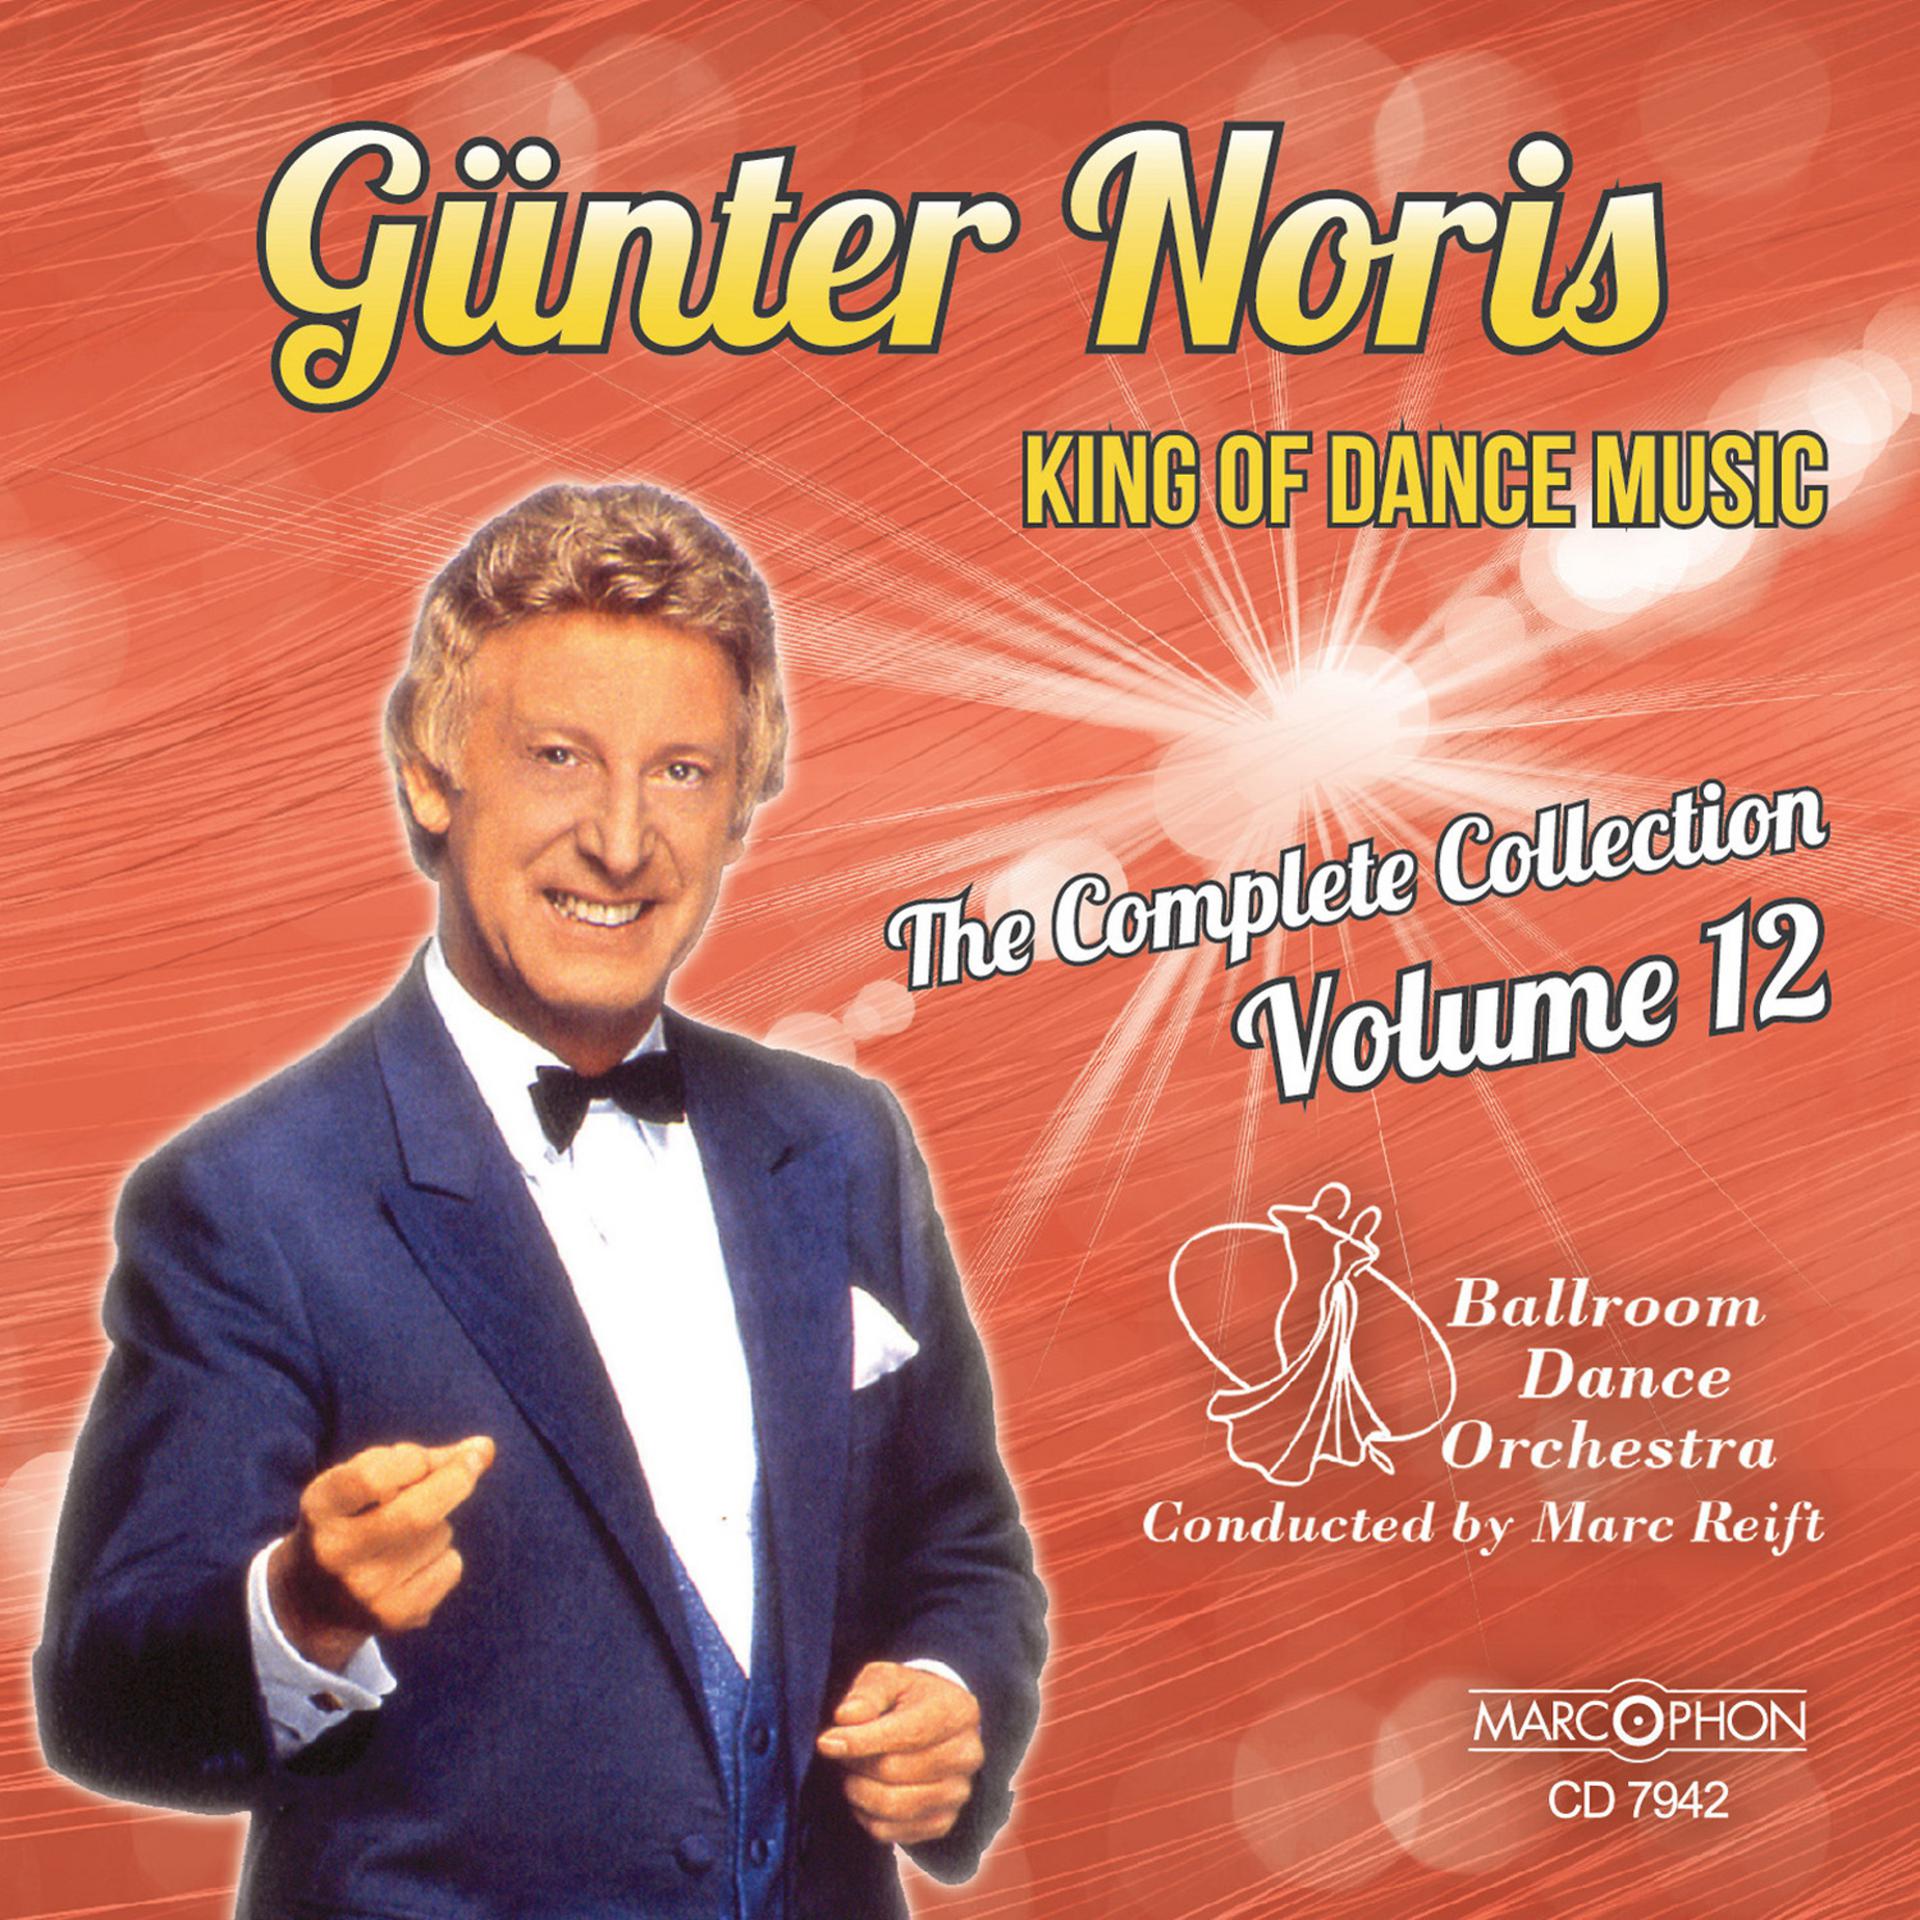 Постер альбома Günter Noris "King of Dance Music" The Complete Collection Volume 12